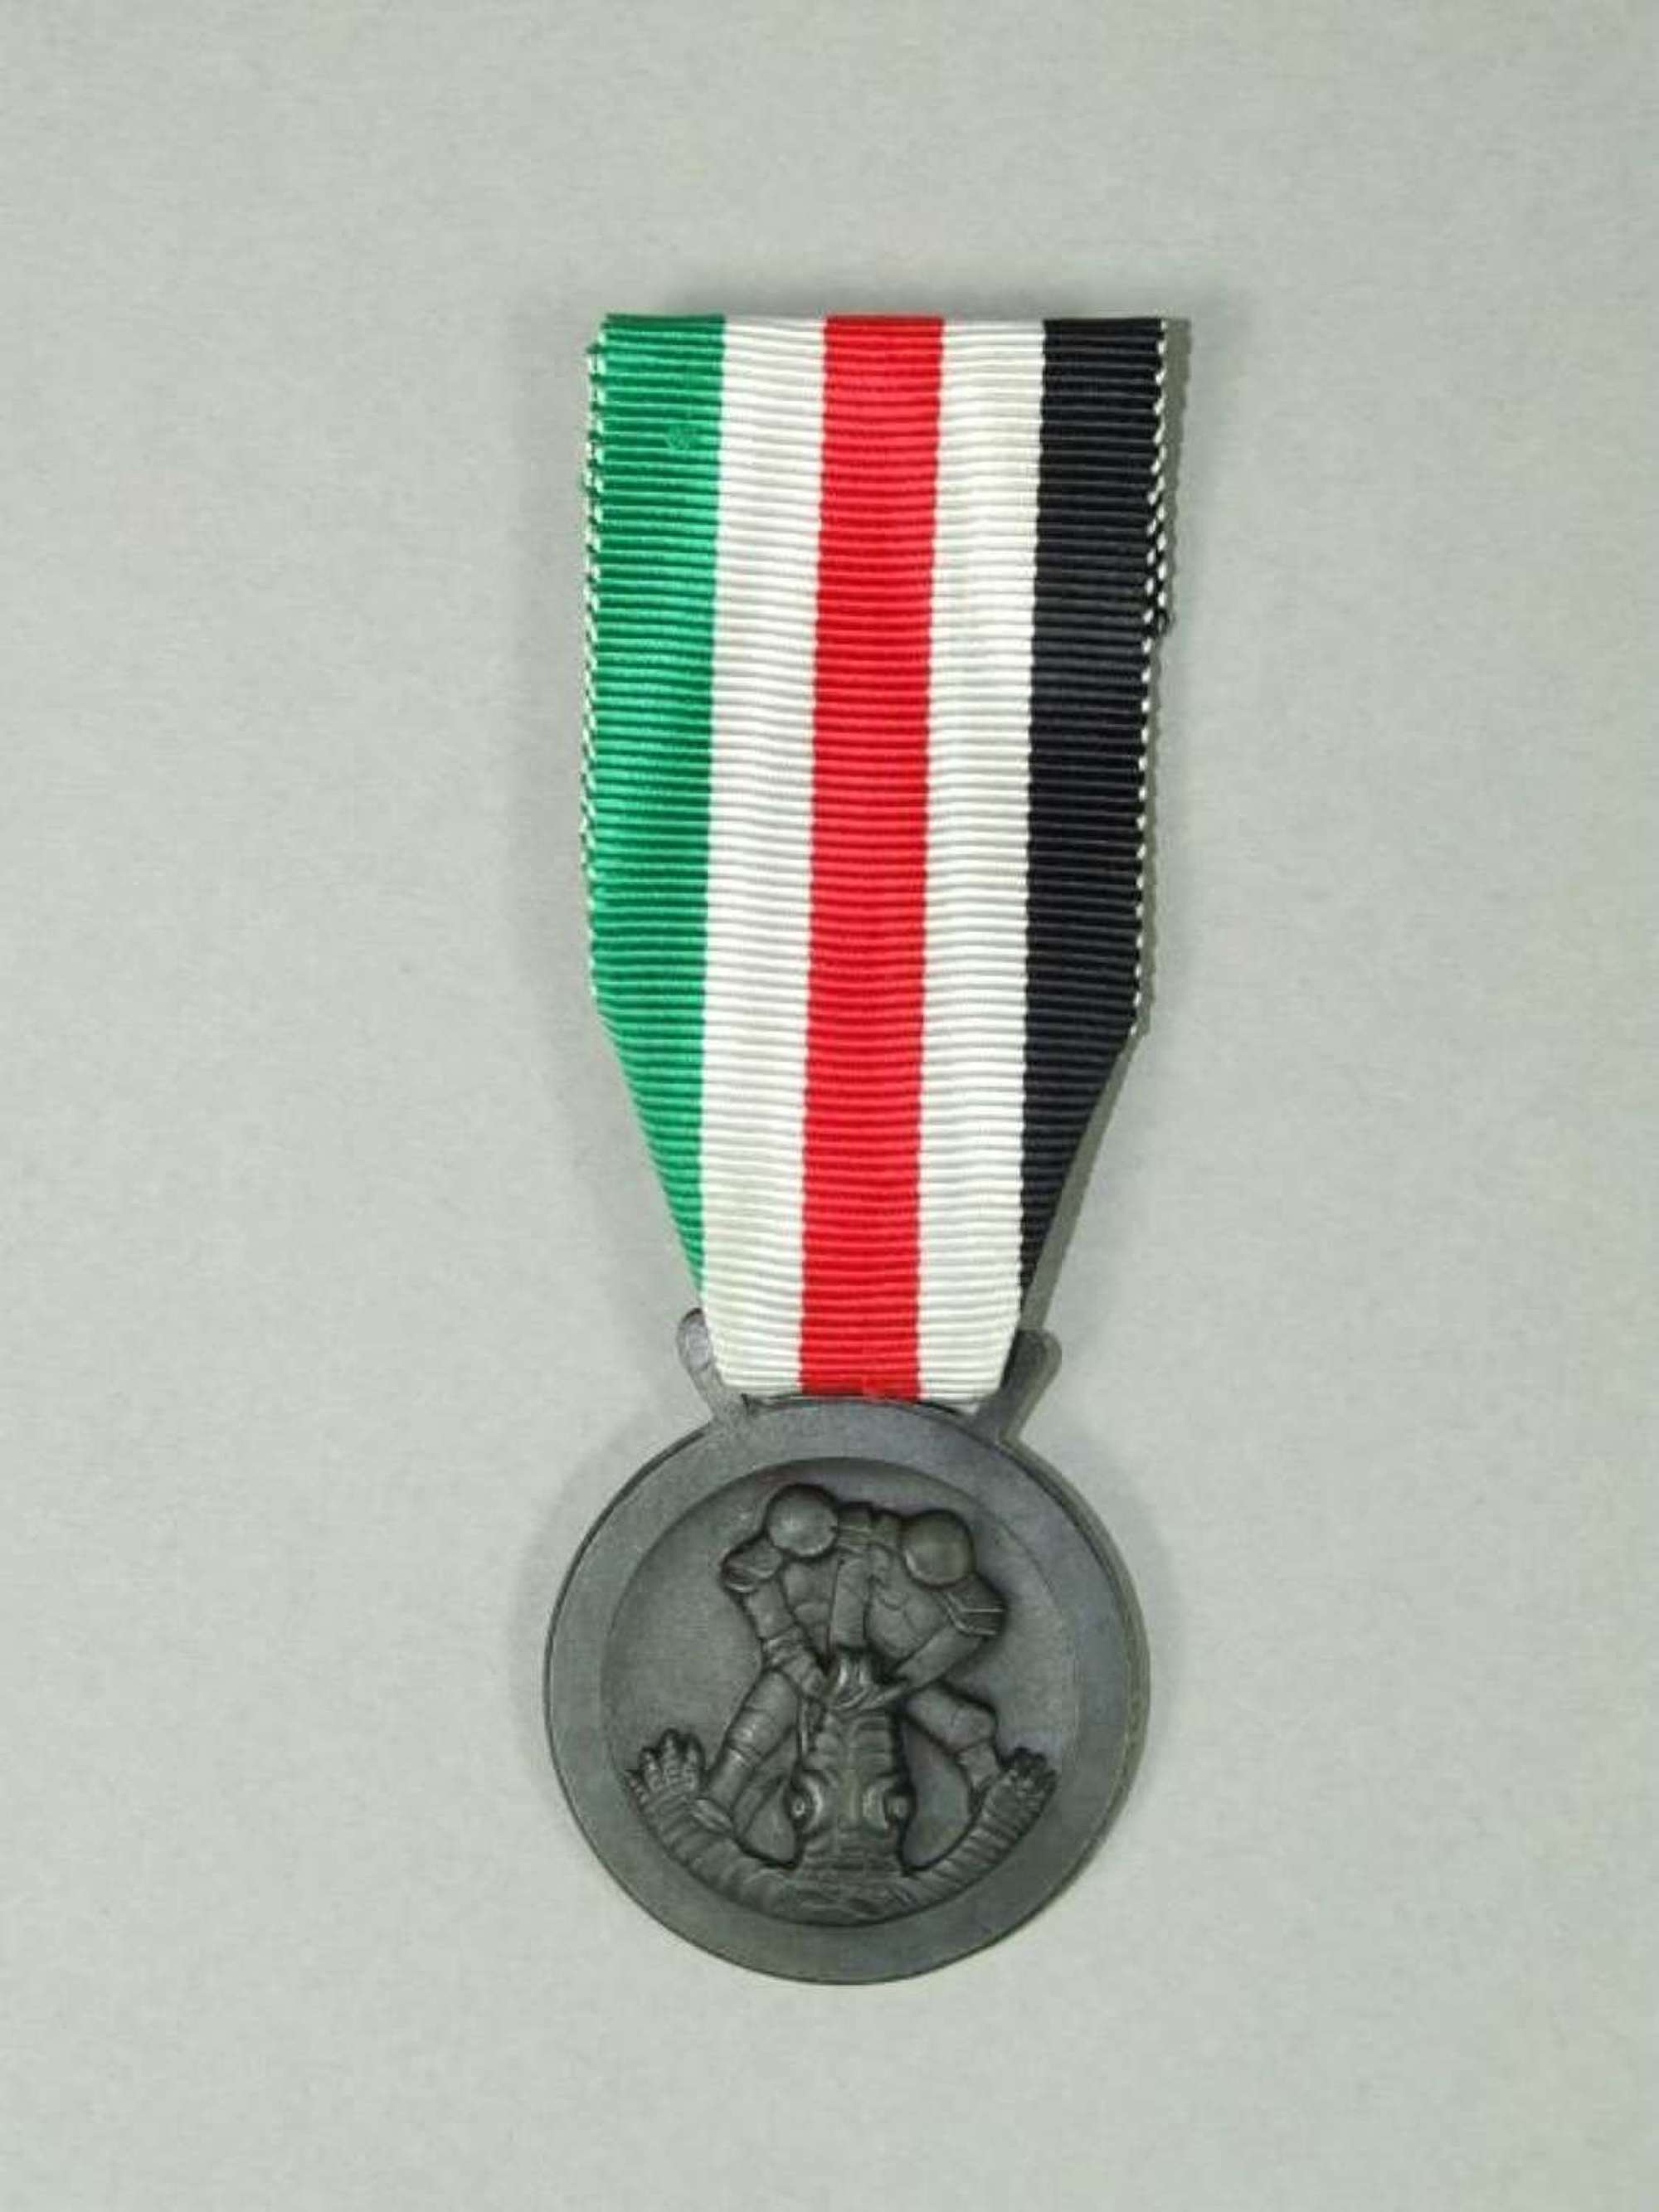 Italian-German African Campaign Medal